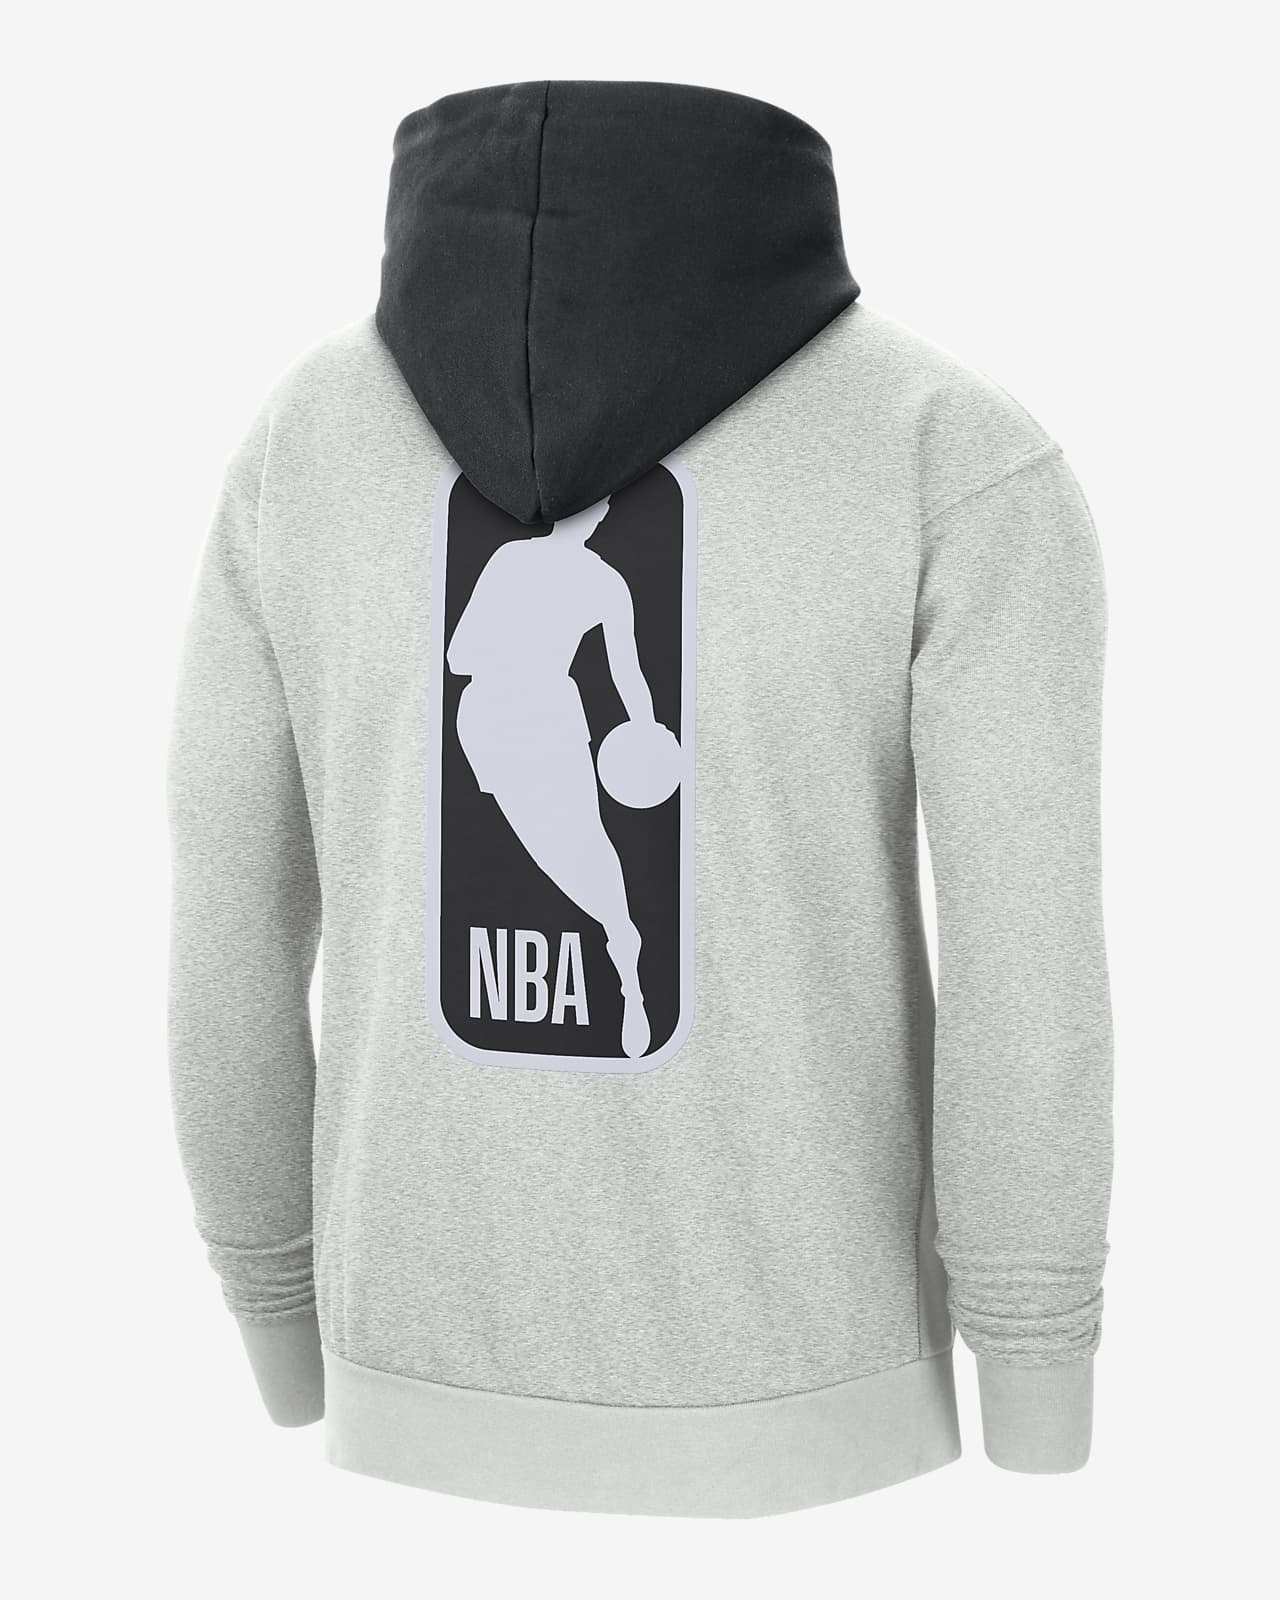 NBA Nike Team 31 Courtside Jacket - Mens